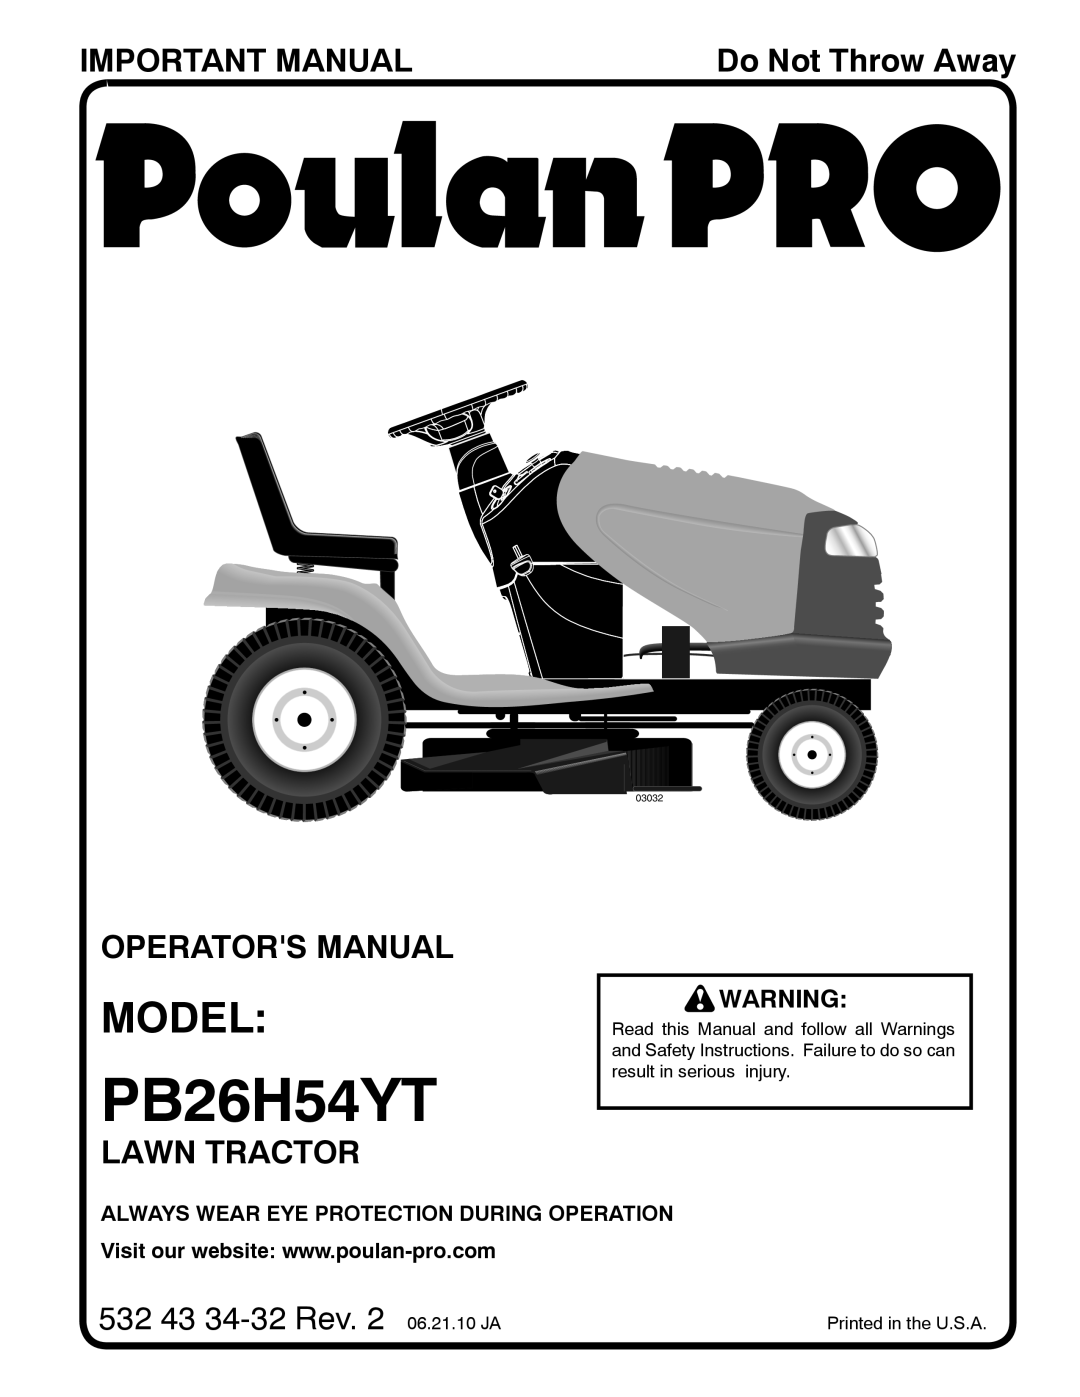 Poulan 96042011001 manual Important Manual, Operators Manual, Lawn Tractor, PB26H54YT, Model, Do Not Throw Away, 03032 